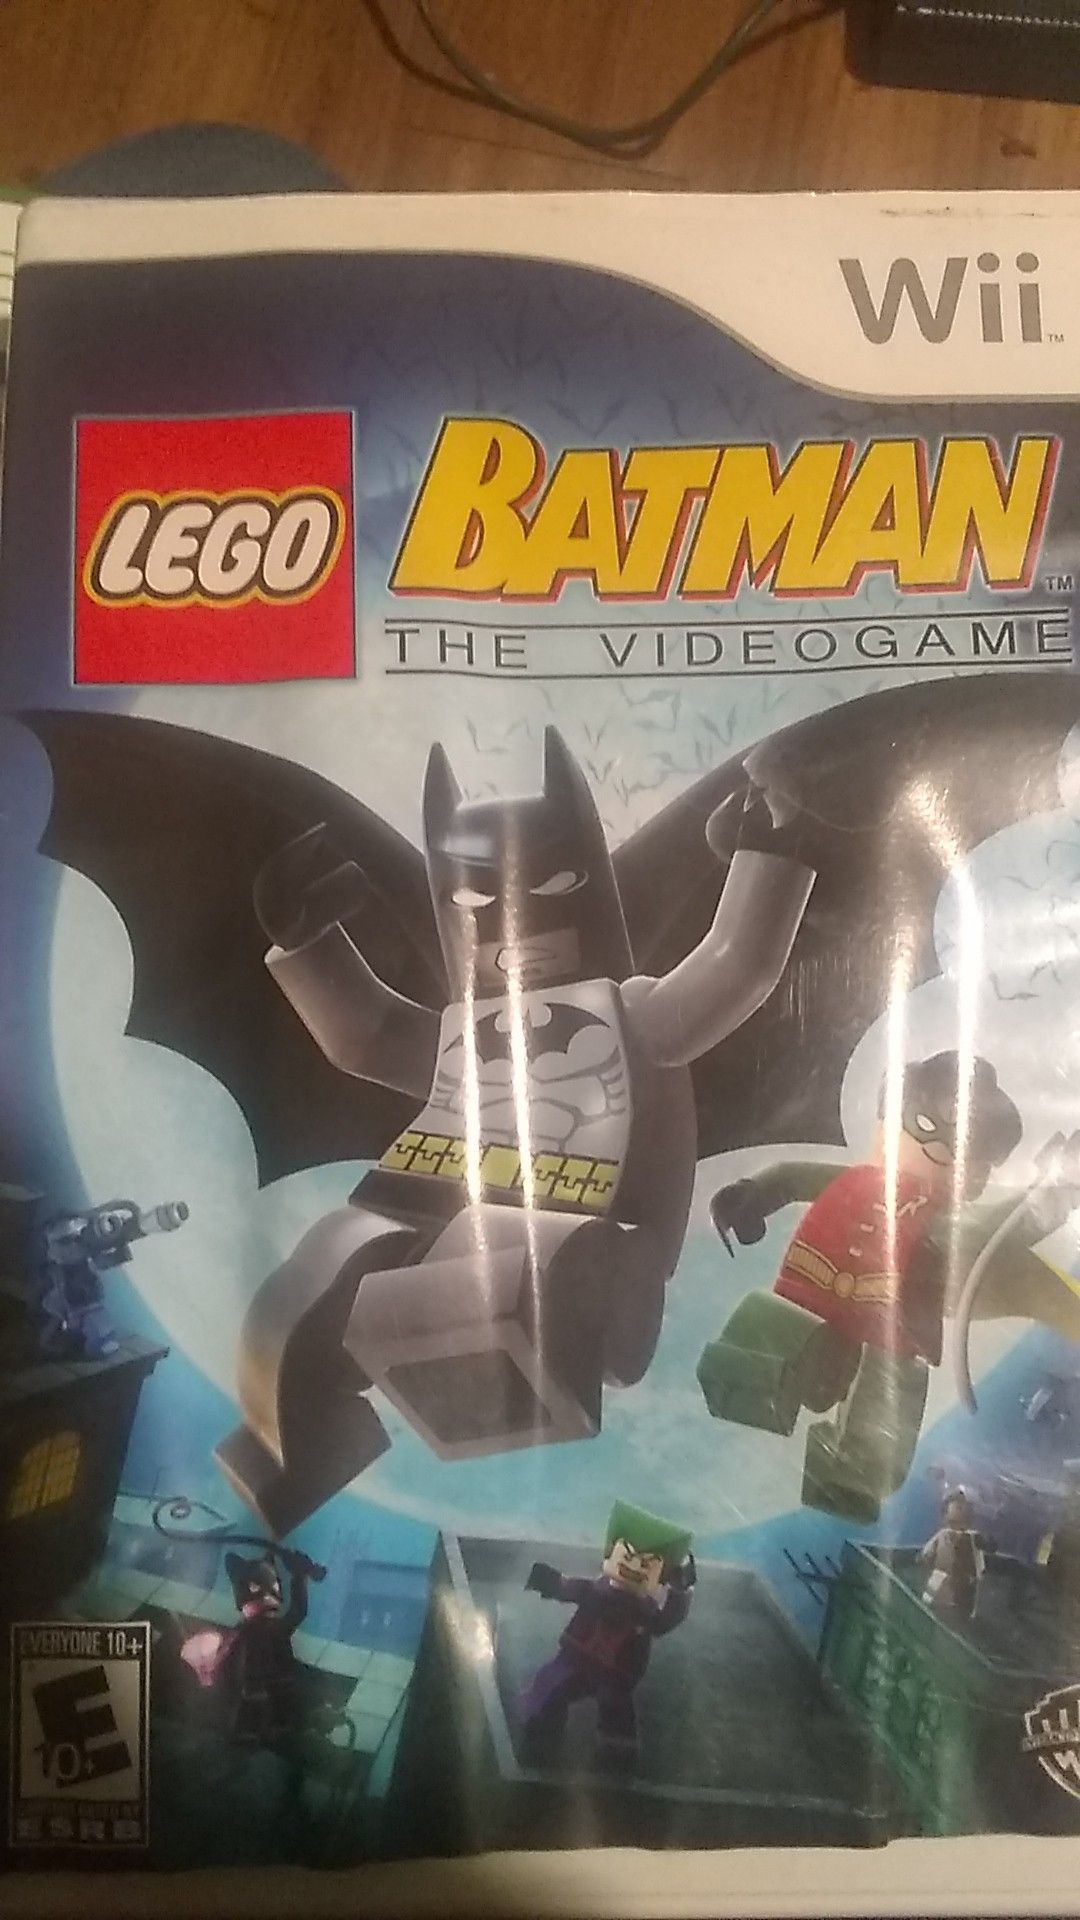 Wii Batman Lego the video game. WaltDisney